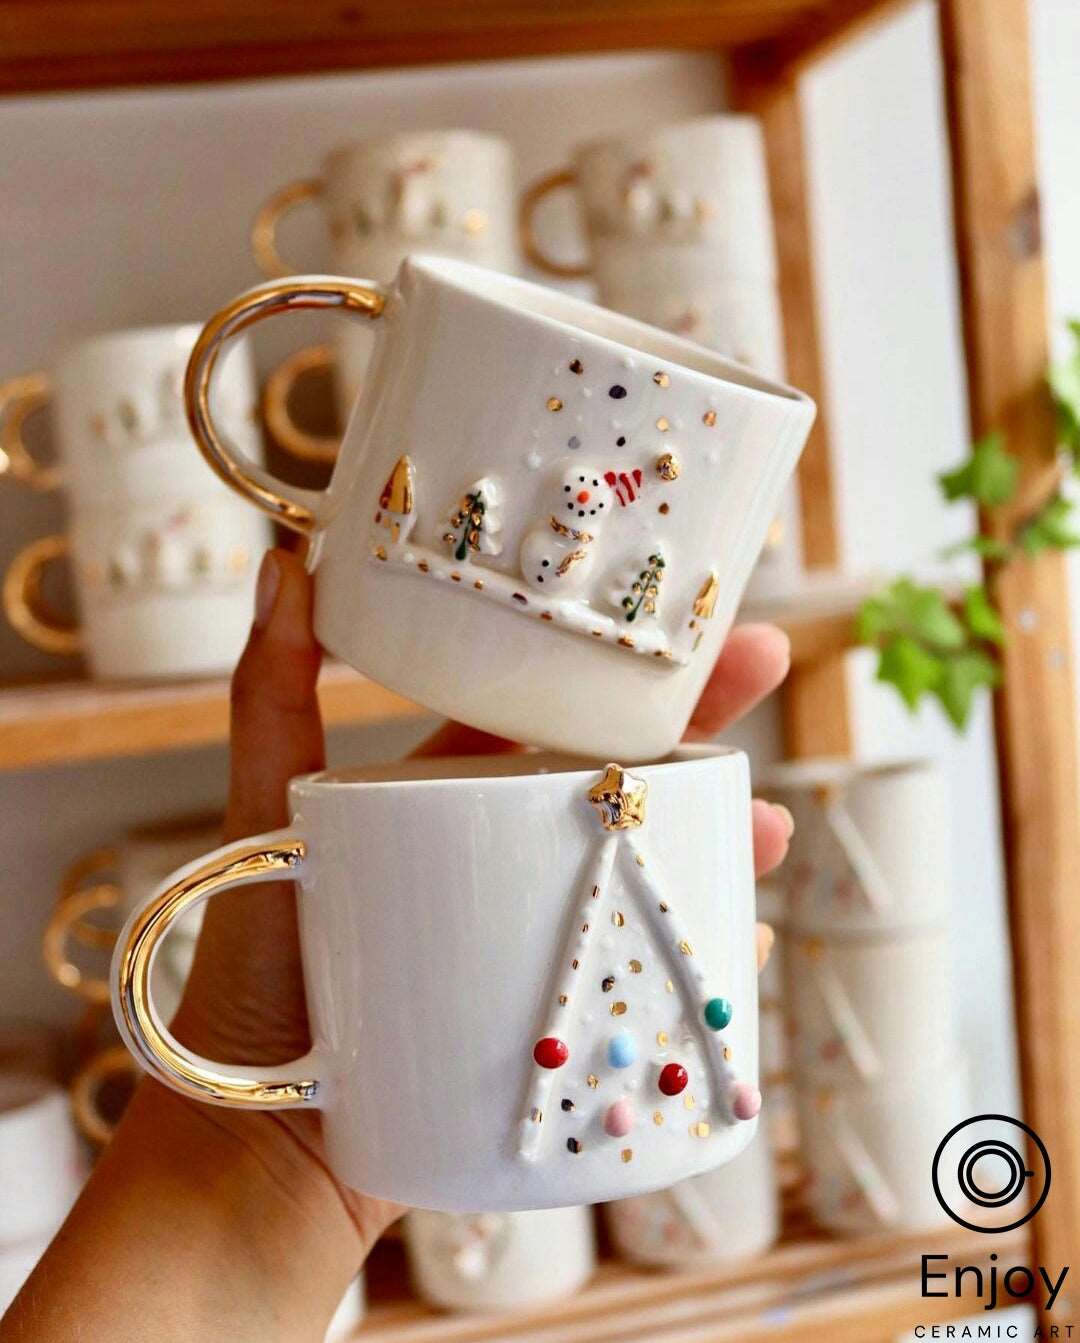 Handmade Christmas Tree Ceramic Coffee Mug - The Perfect Holiday-Themed Handmade Gift